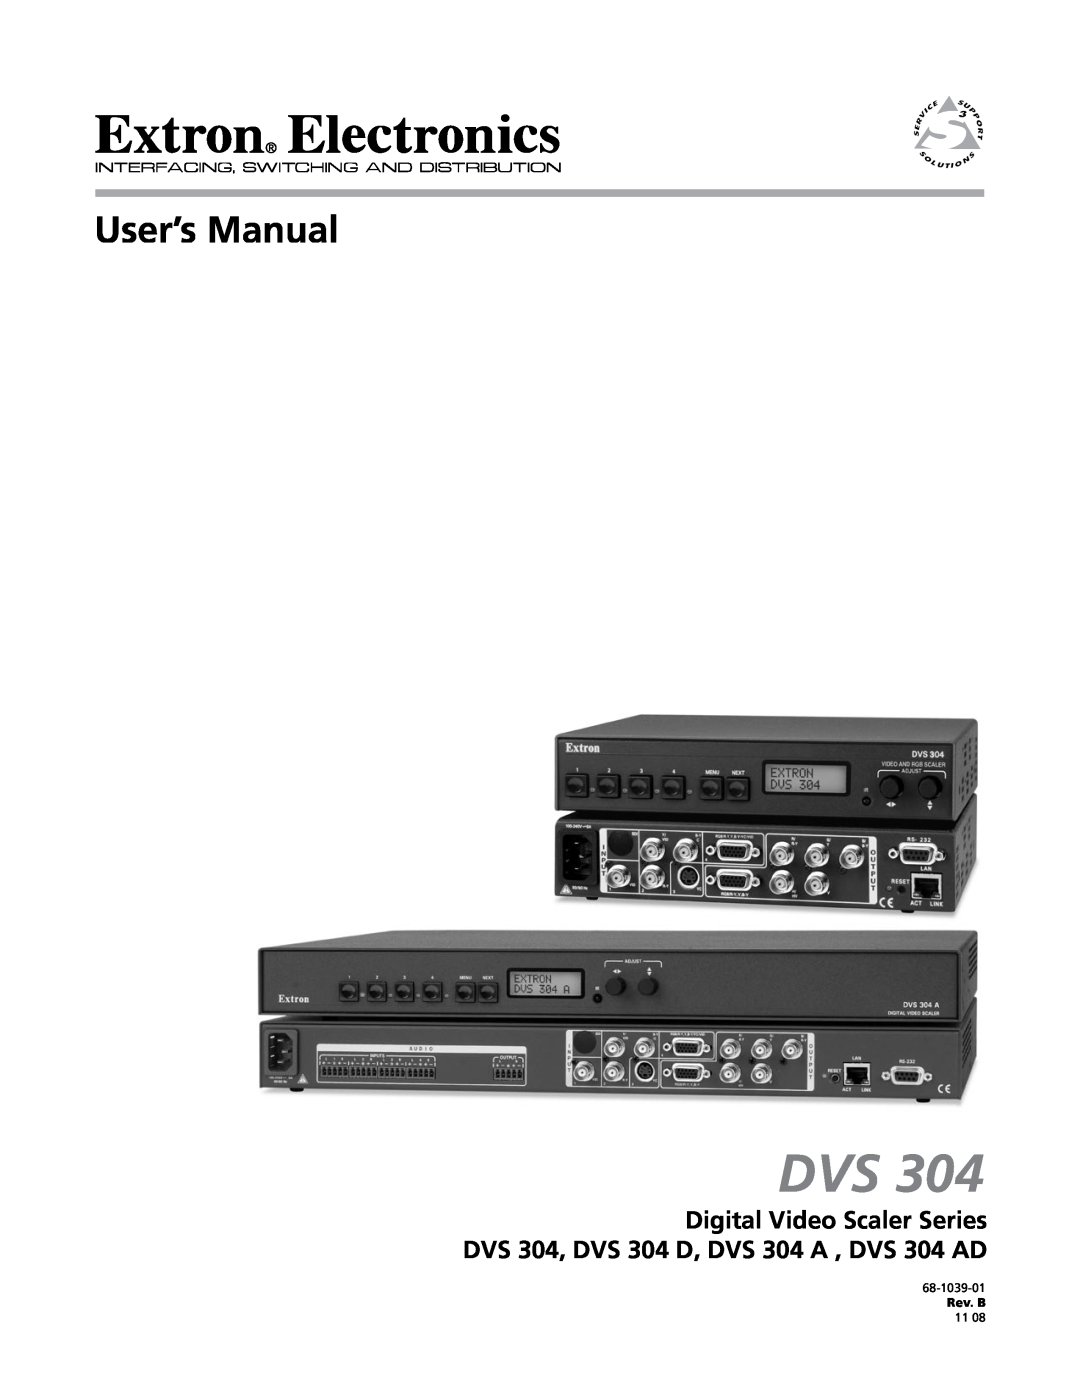 Extron electronic DVS 304 D, DVS 304 AD manual 68-1039-01, Rev. B 